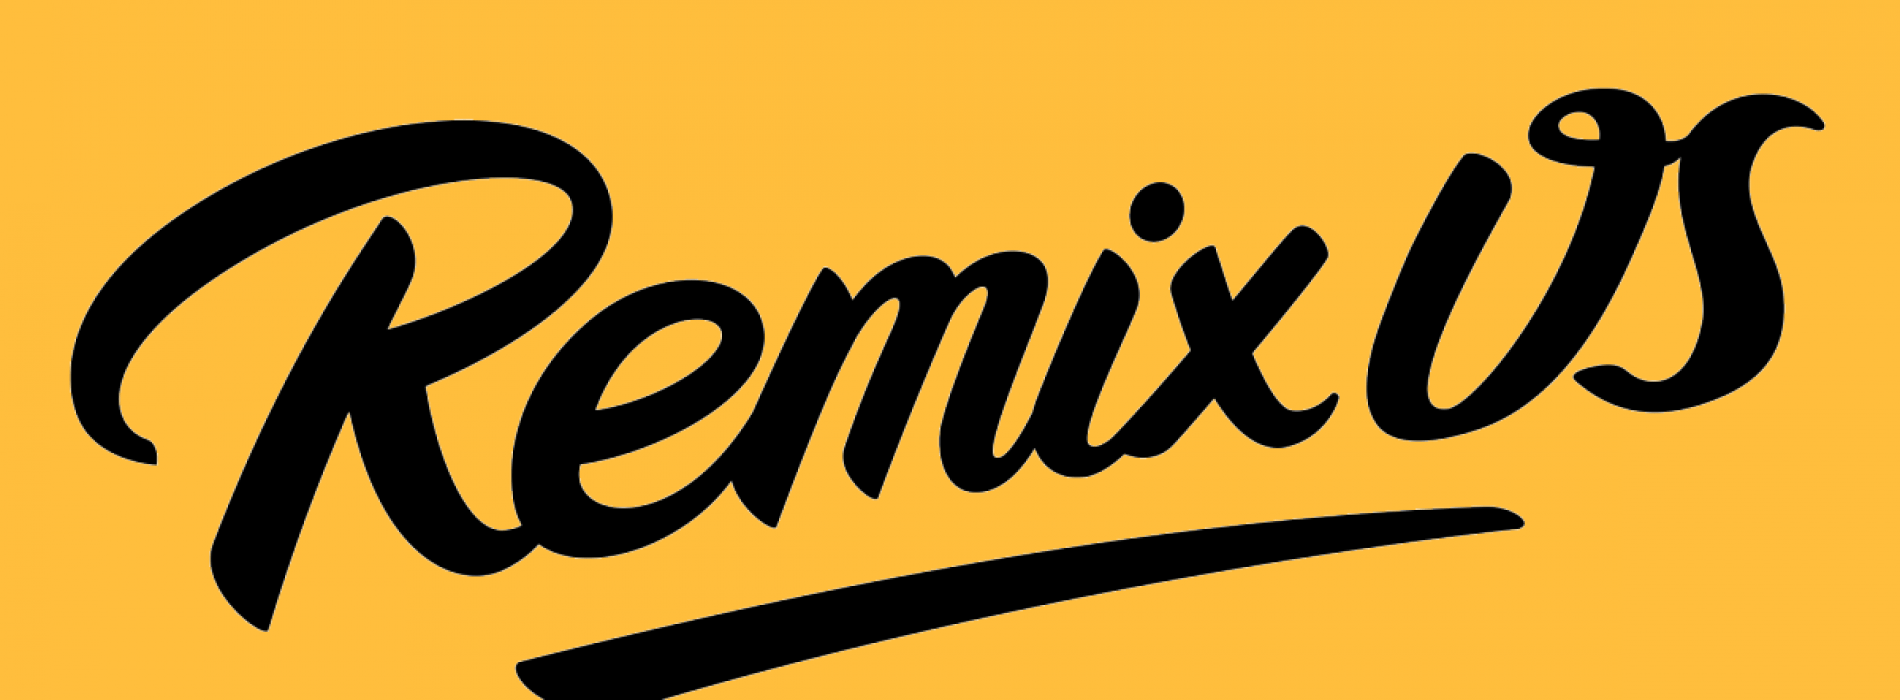 RemixOs Android Emulator